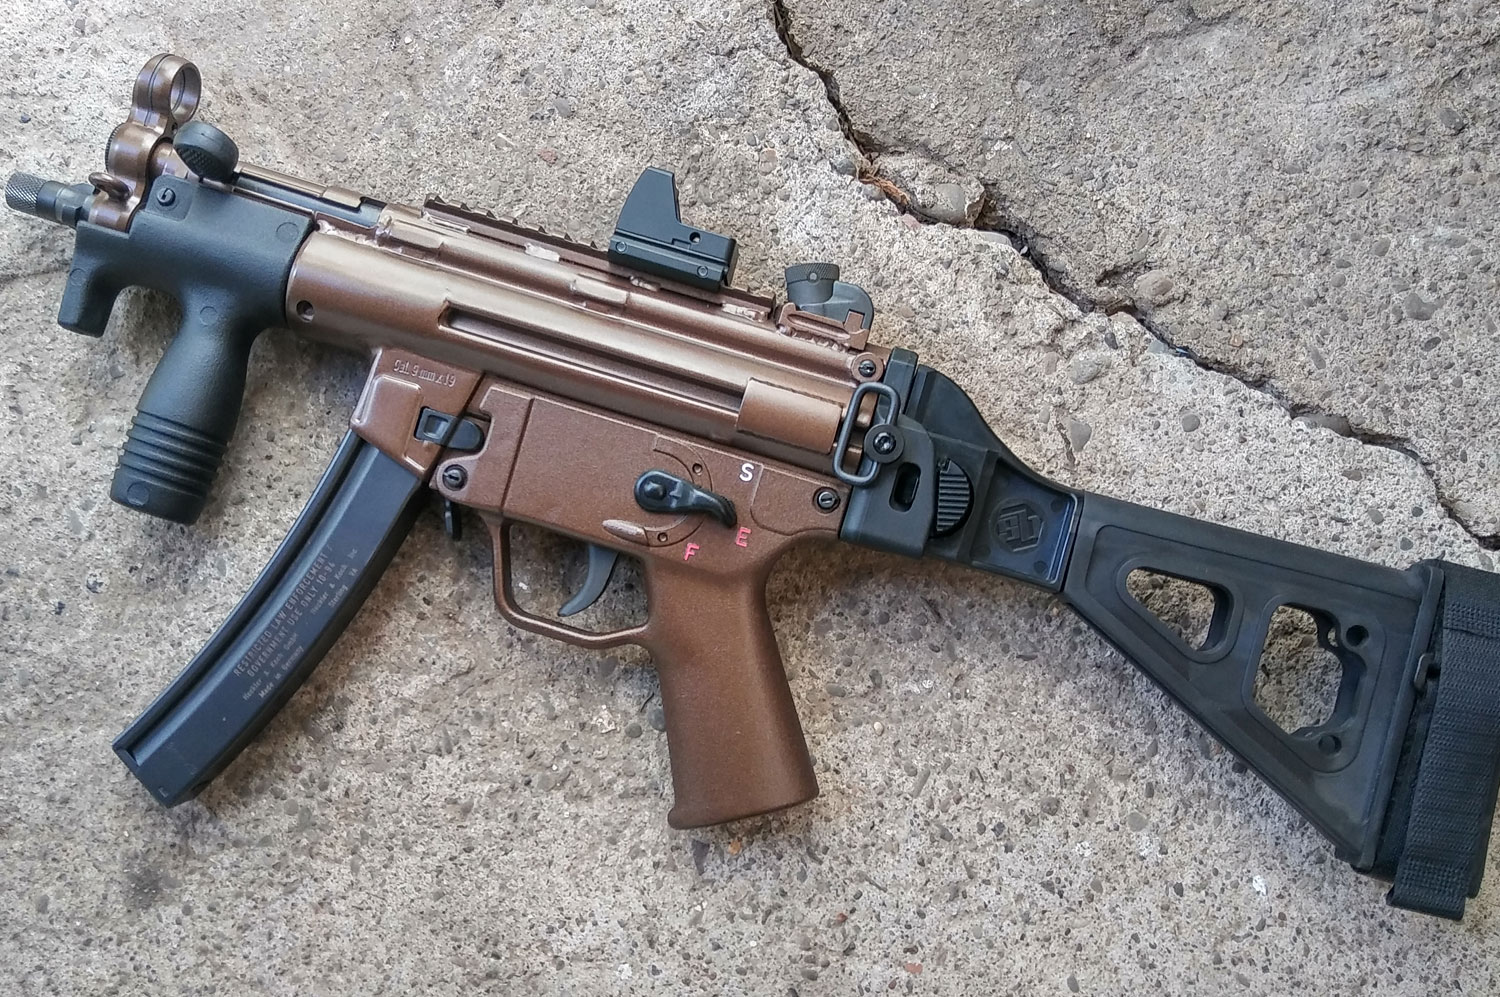 GunSpot Guns for sale | Gun Auction: HK MP5SD 9mm Transferable Machine Gun